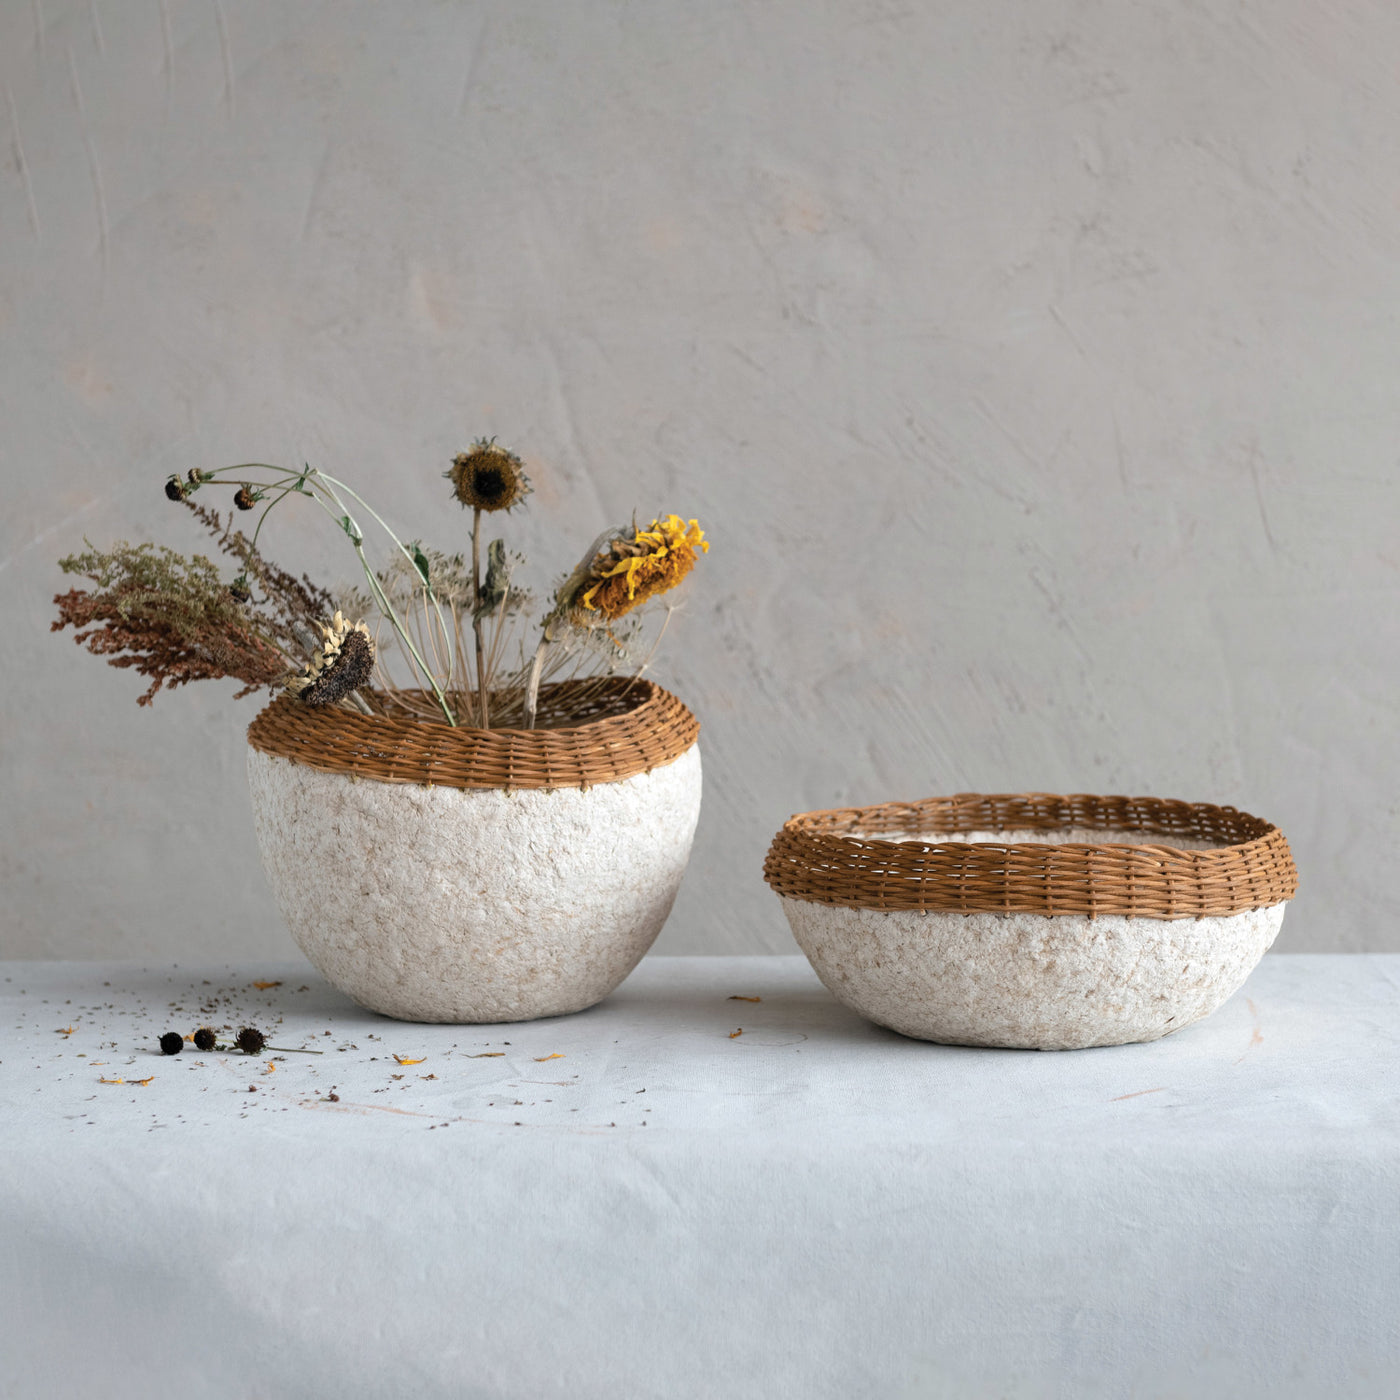 Decorative Handmade Paper Mache Bowl w/ Wicker Rim (Each One Will Vary)